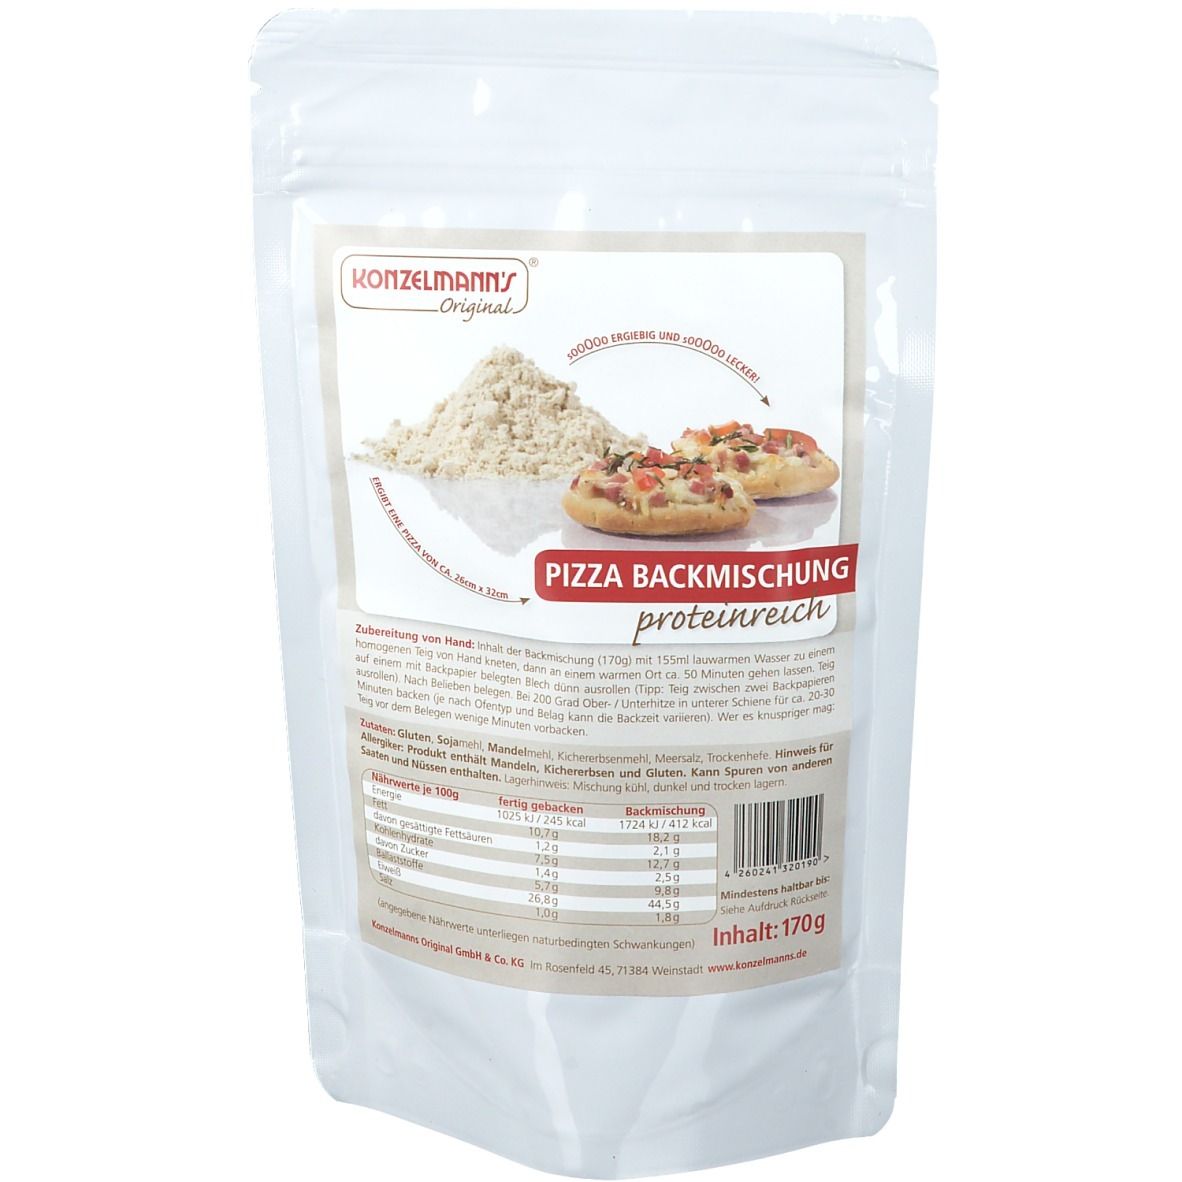 Image of Konzelmanns Original Pizza Backmischung